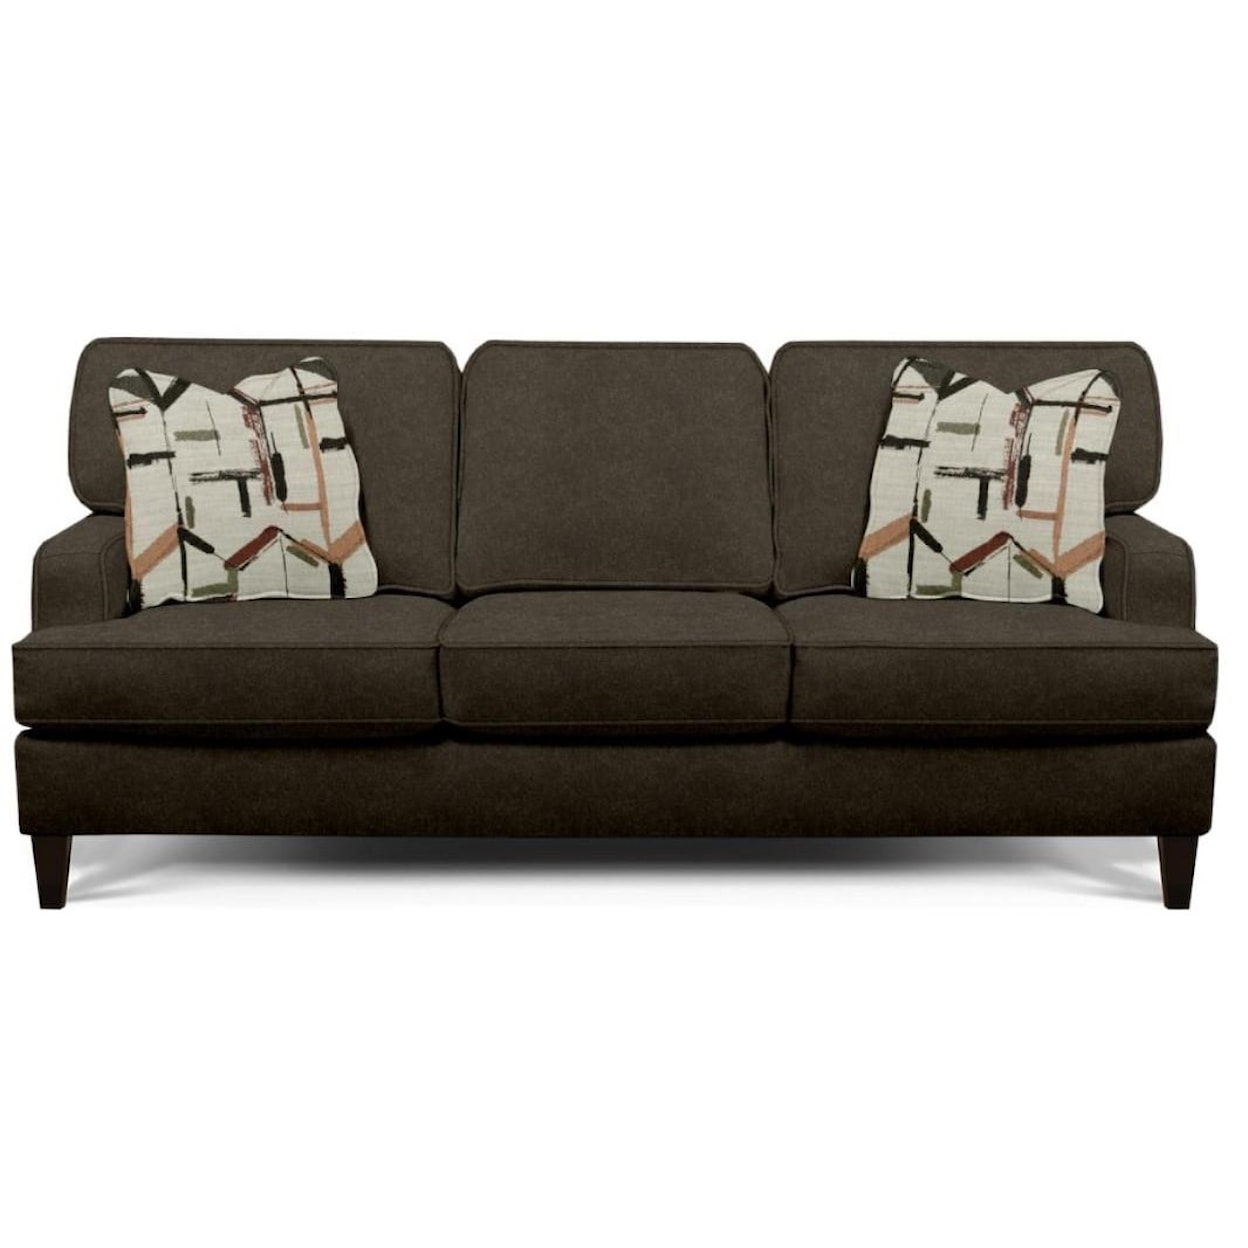 England Lewis 3 Cushion Sofa